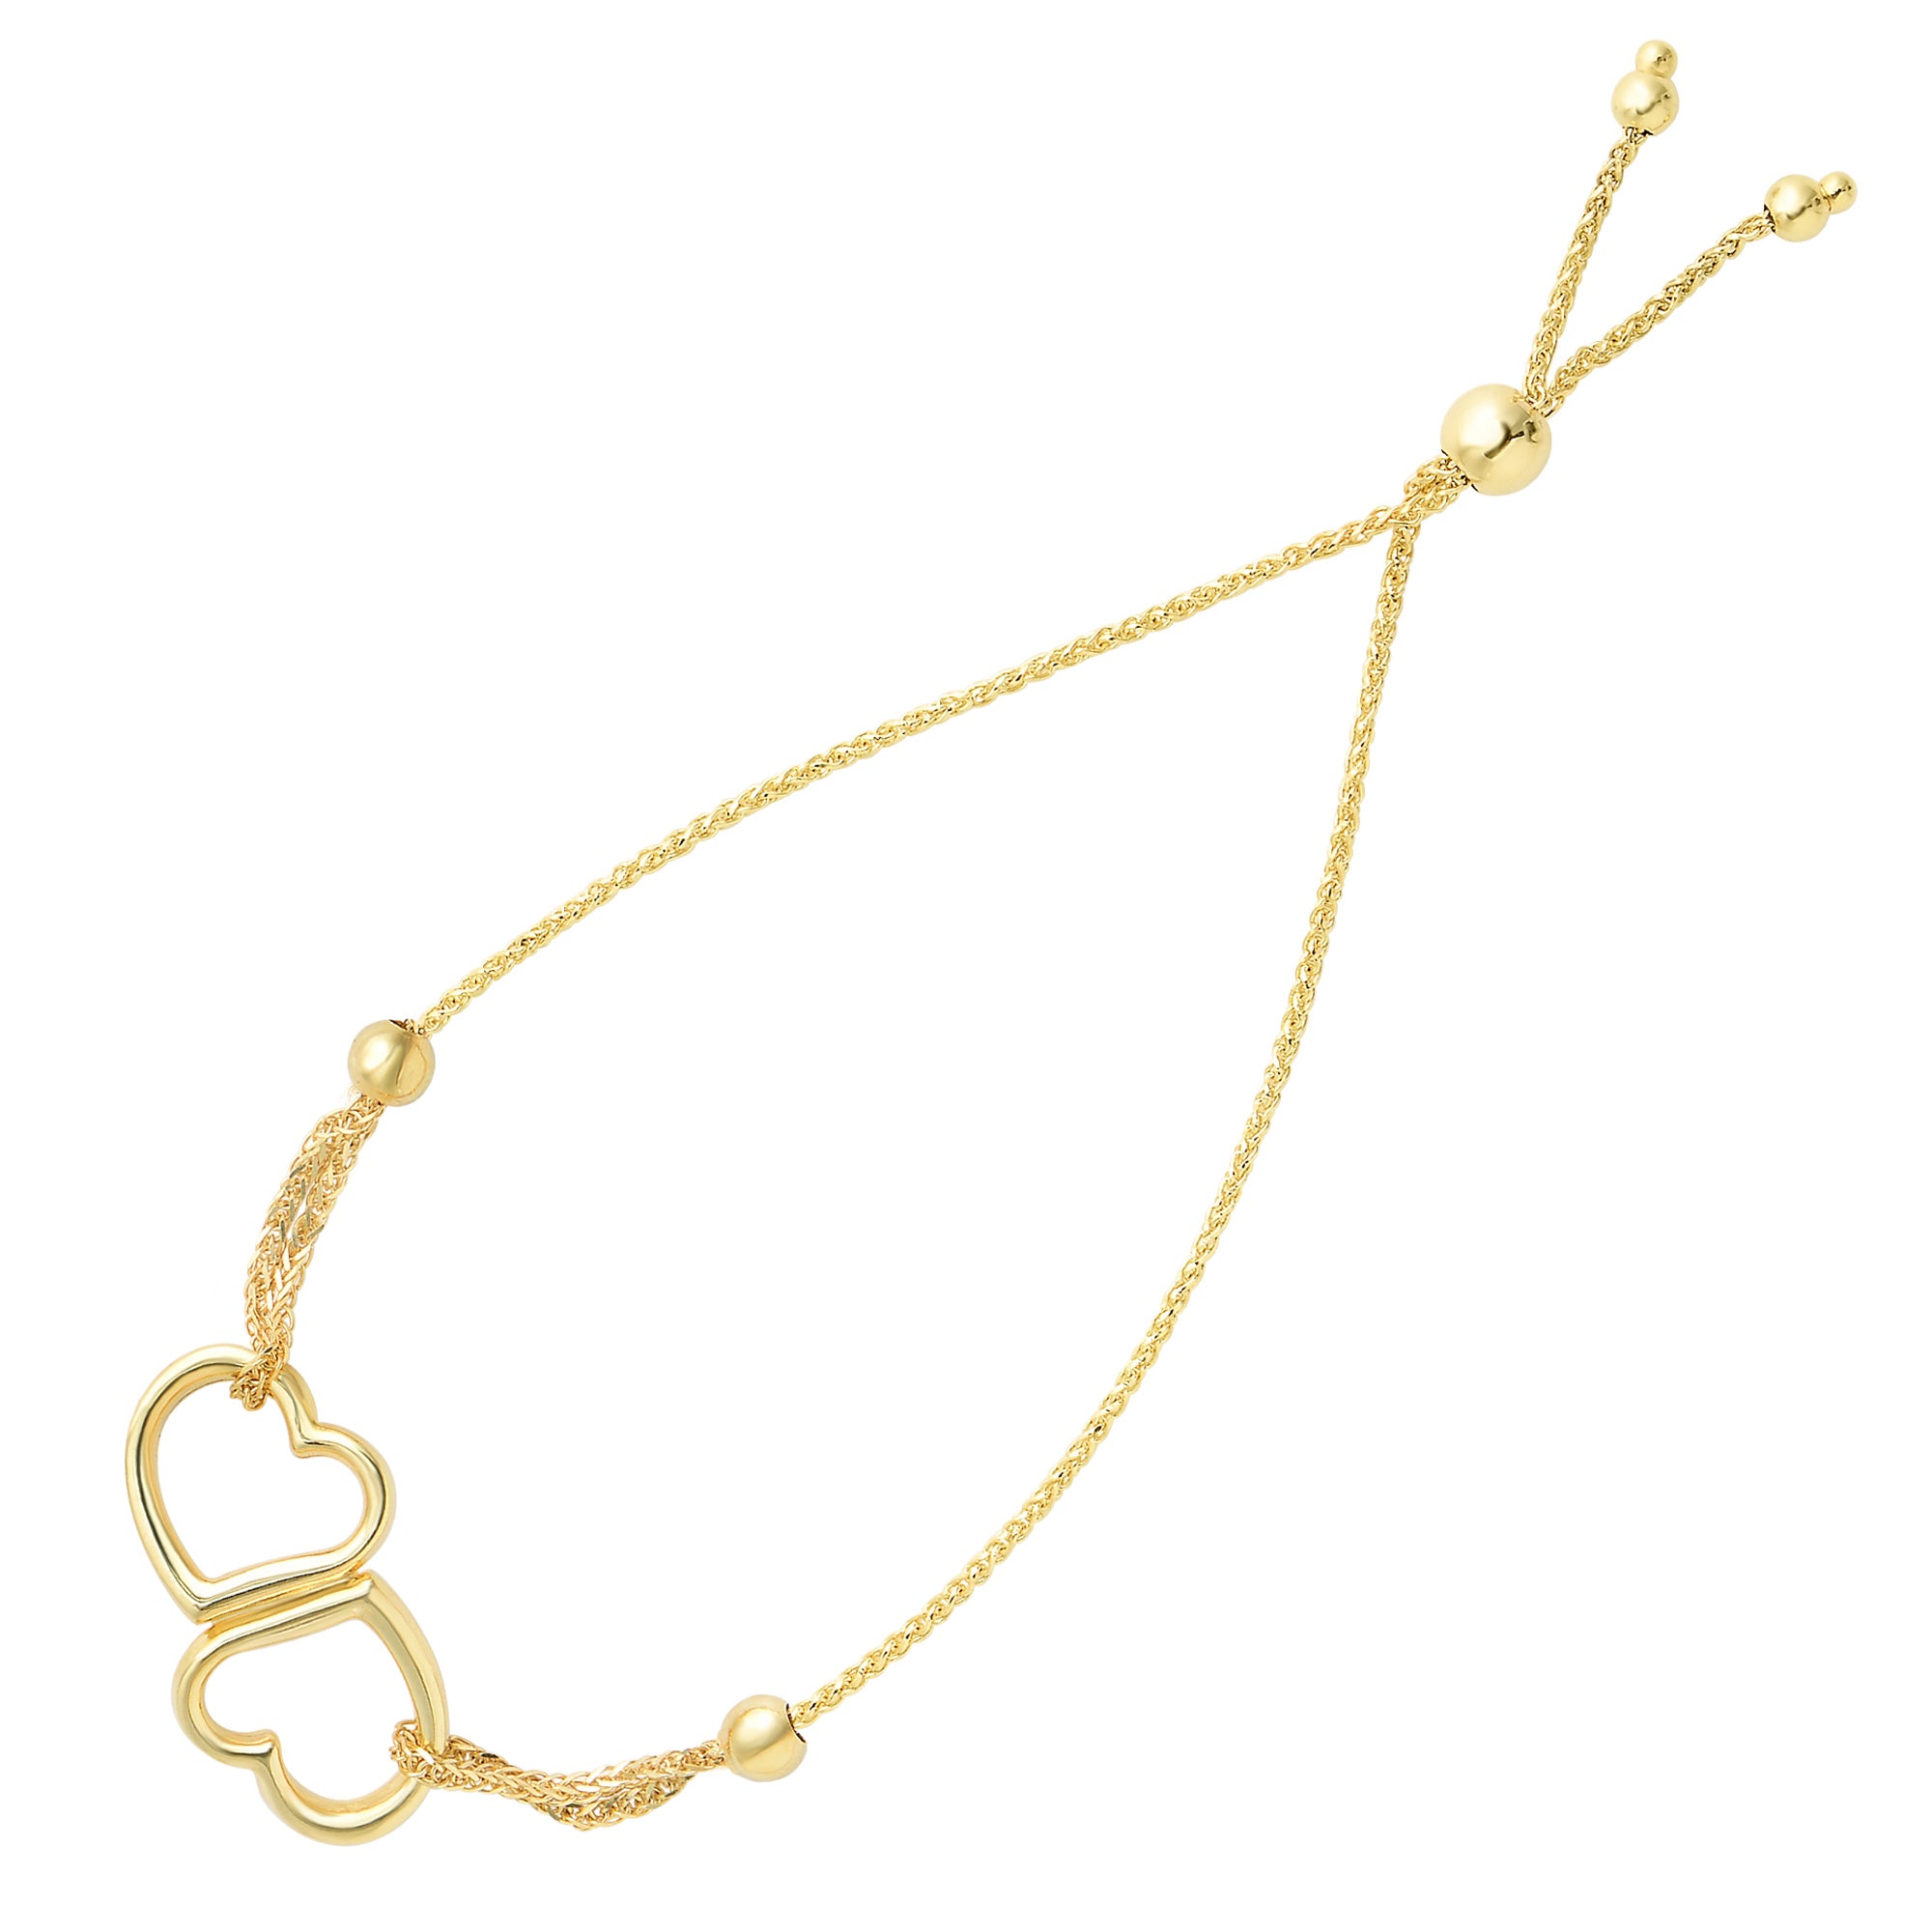 Double Open Heart Center Element Bolo Friendship Adjustable Bracelet In 14K Yellow Gold, 9.25" fine designer jewelry for men and women